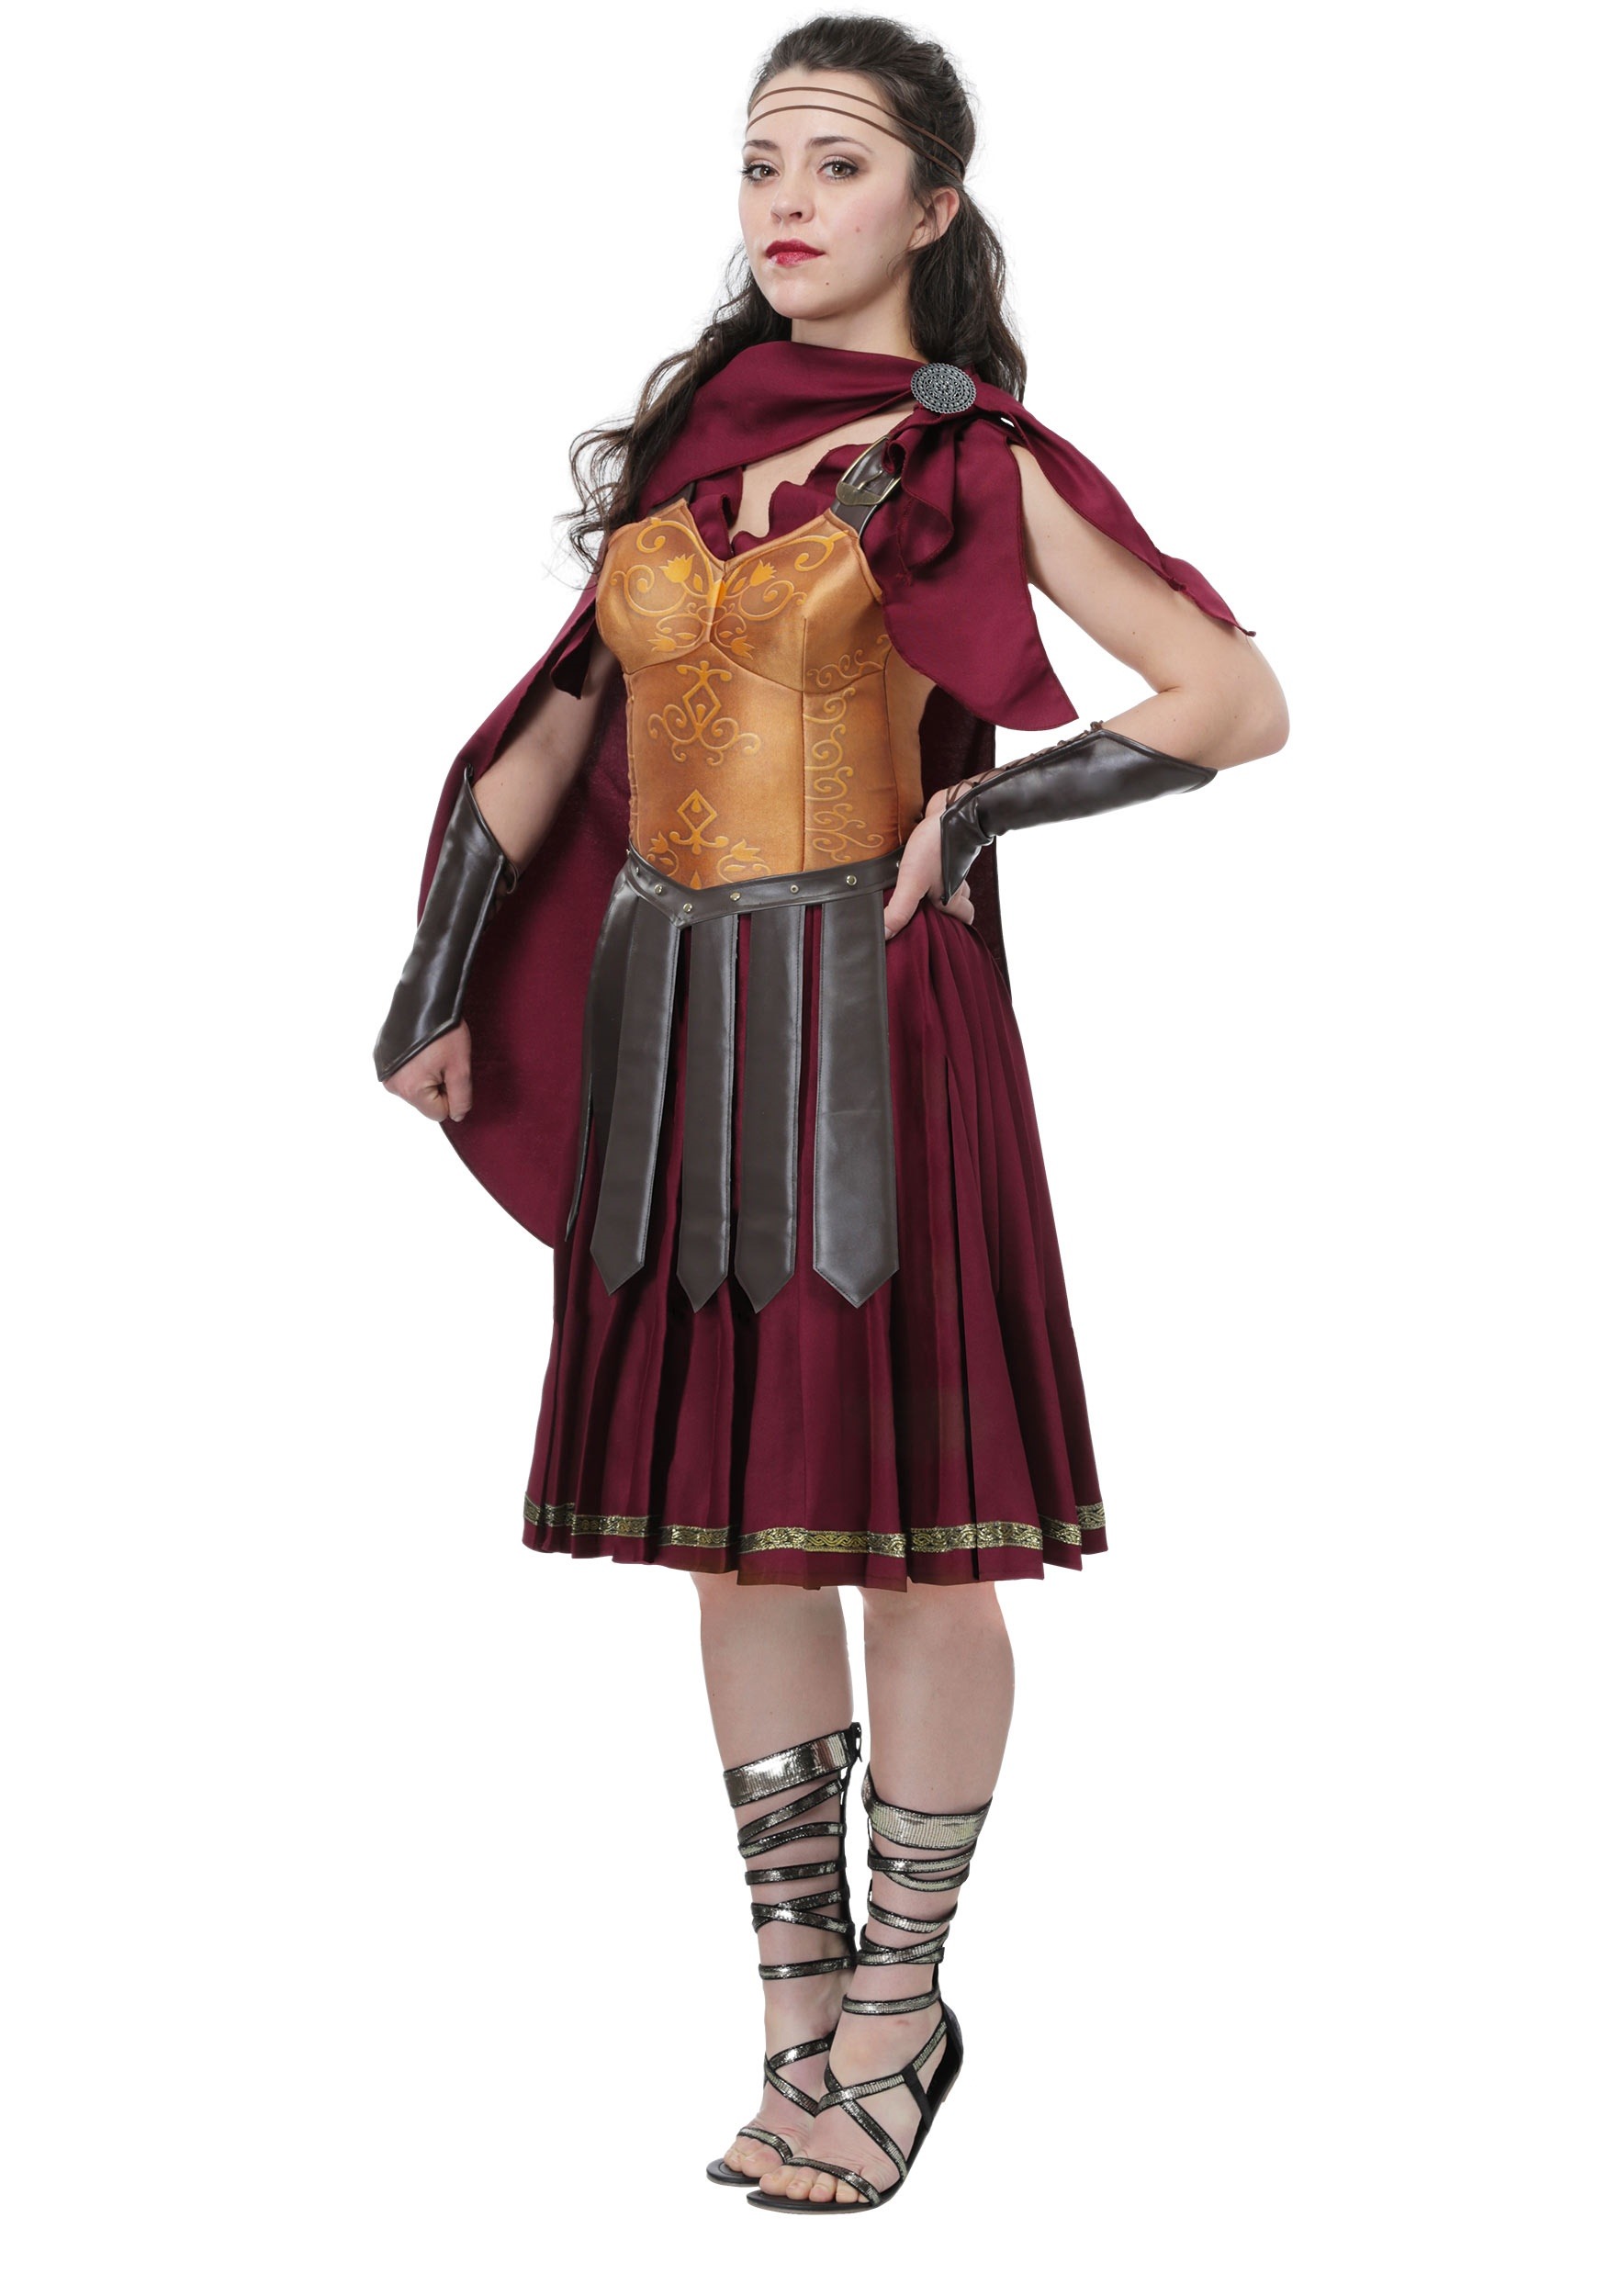 Gladiator Plus Size Costume for Women